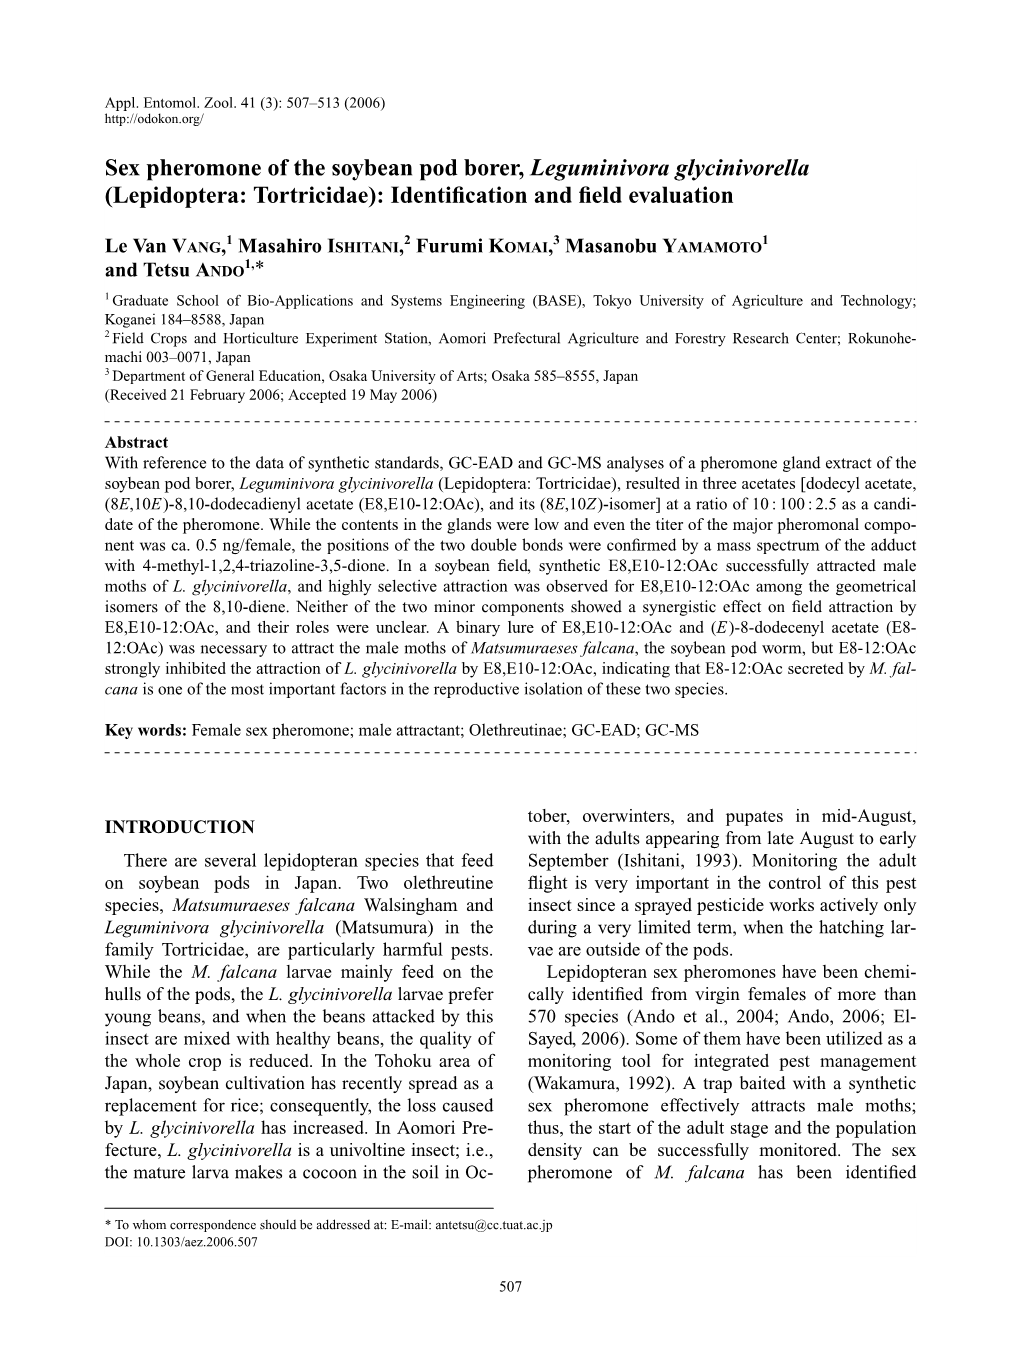 Sex Pheromone of the Soybean Pod Borer, Leguminivora Glycinivorella (Lepidoptera: Tortricidae): Identification and Field Evaluation